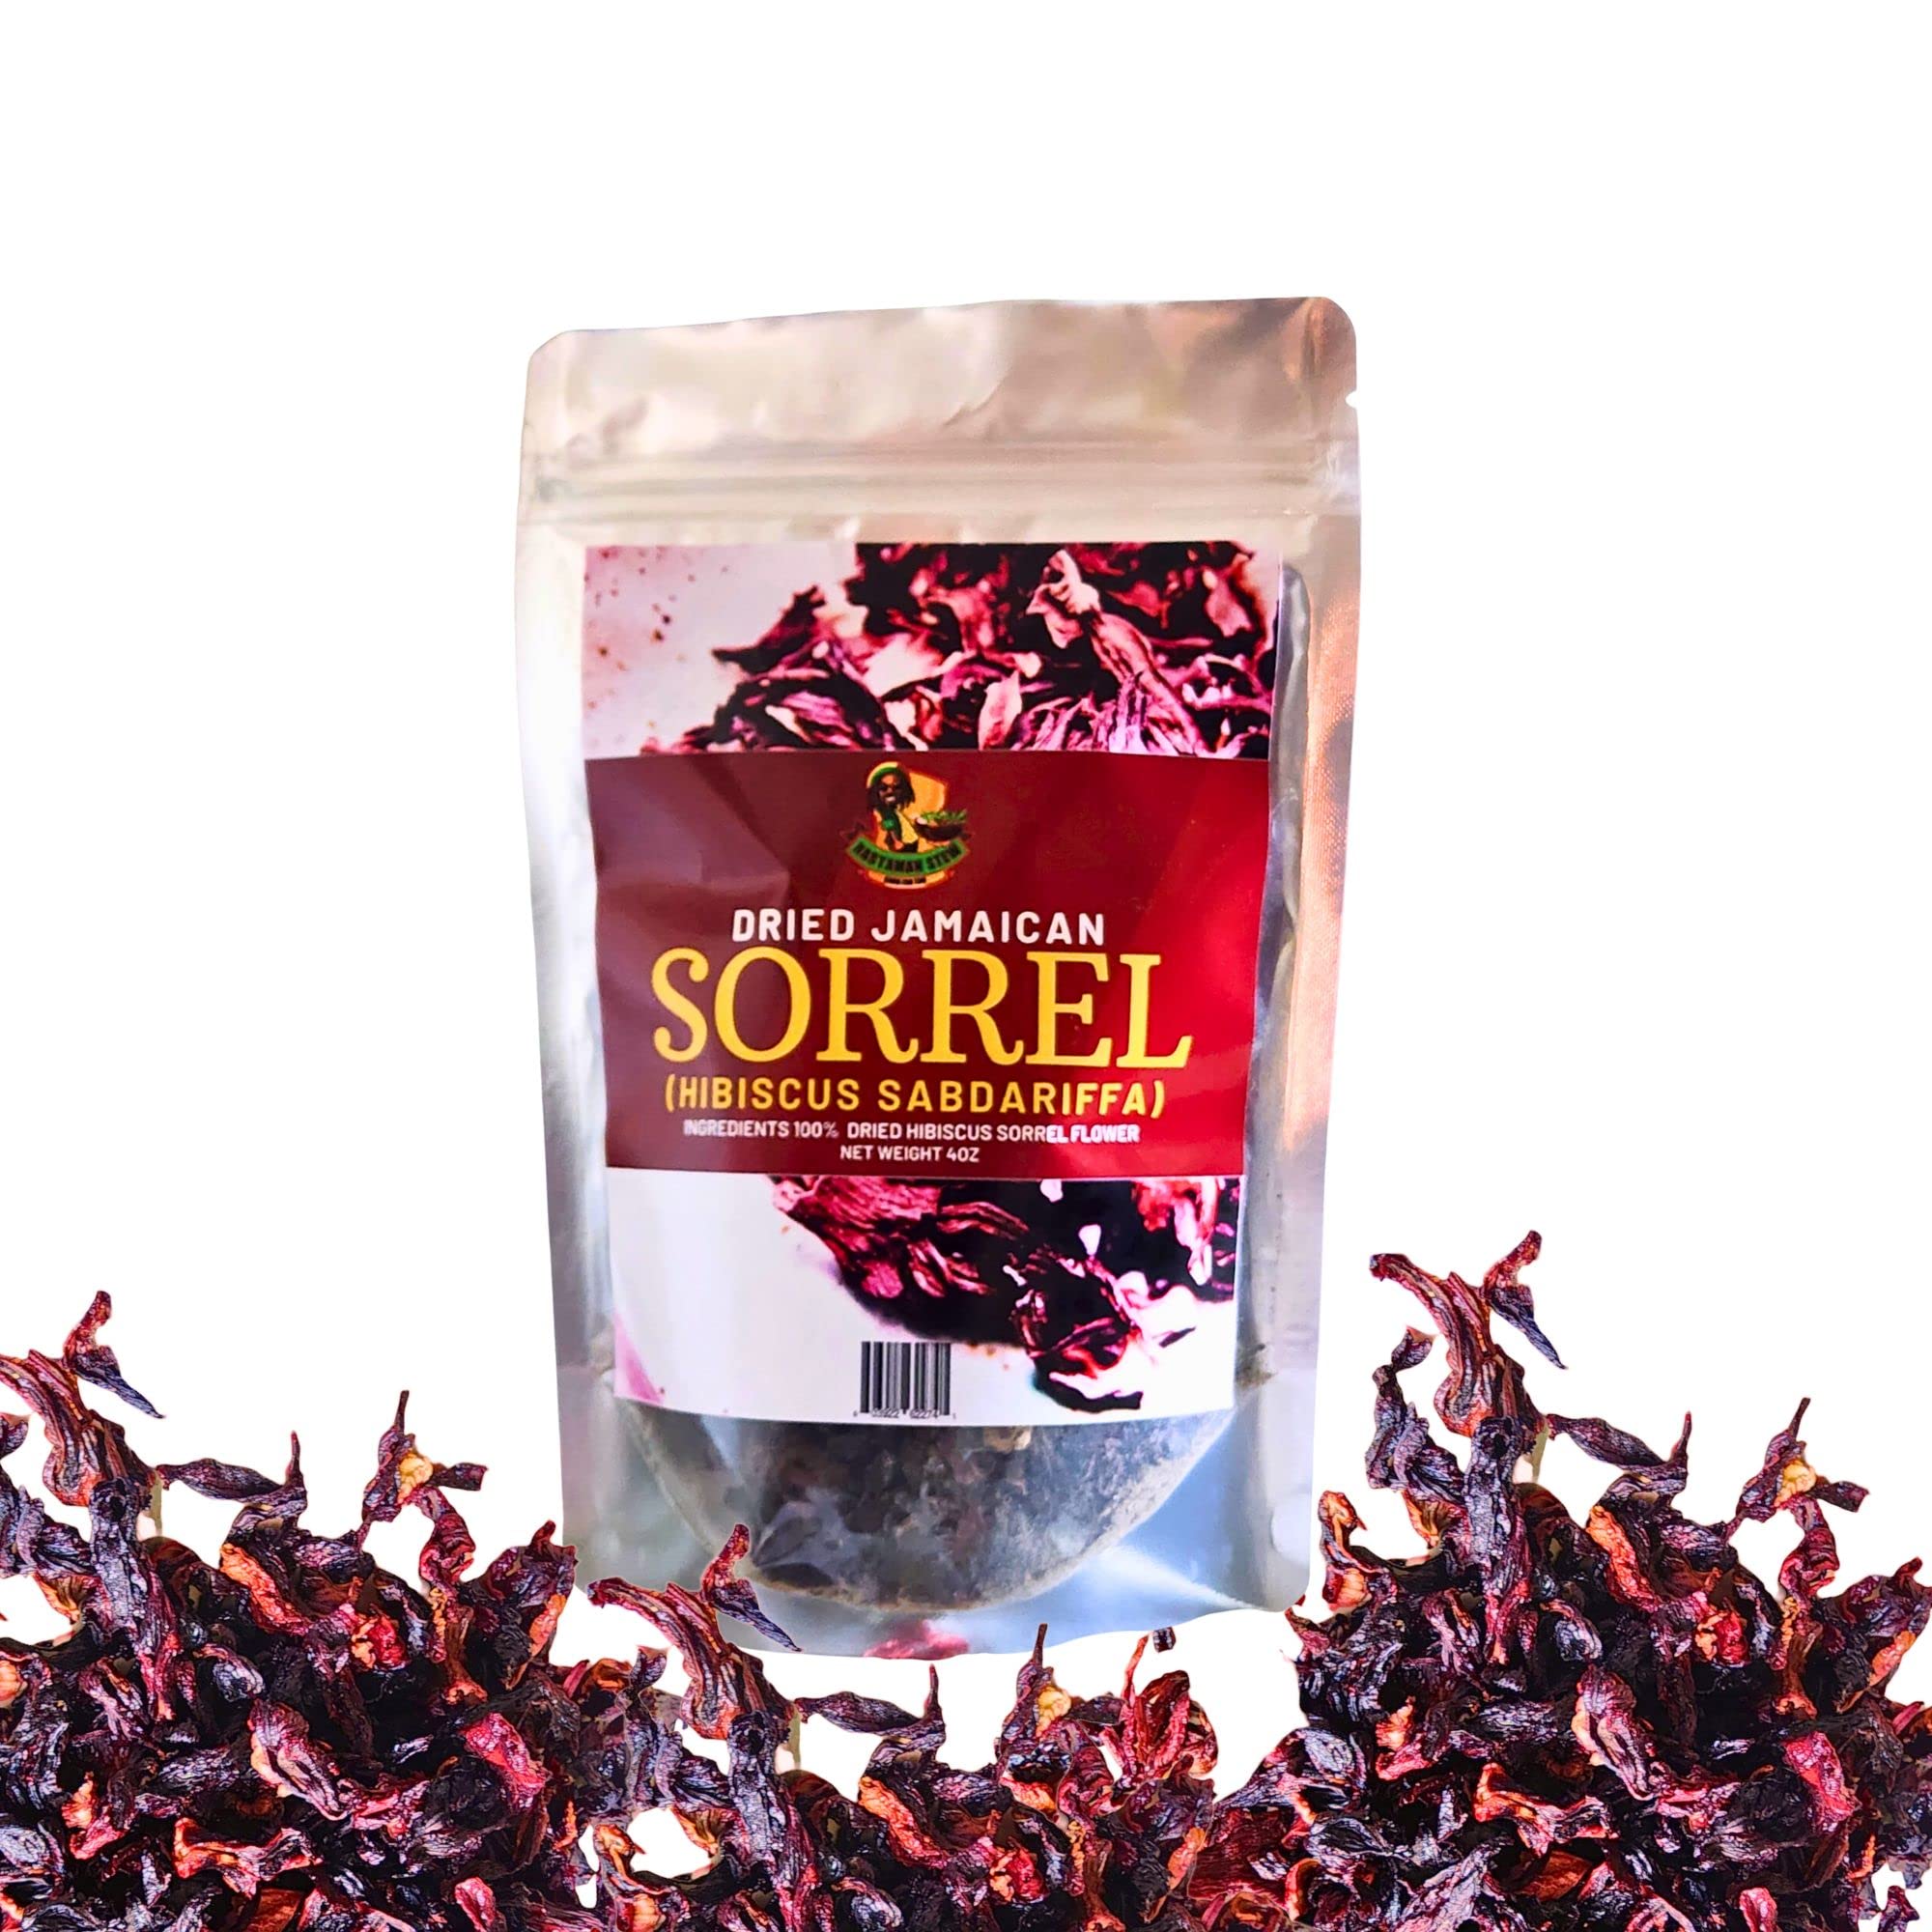 Premium Organic Dried Jamaican Sorrel Hibiscus Tea 4oz - Rastaman Stew Herbal Blend for Refreshing Taste, Rich in Flavor and Health Benefits